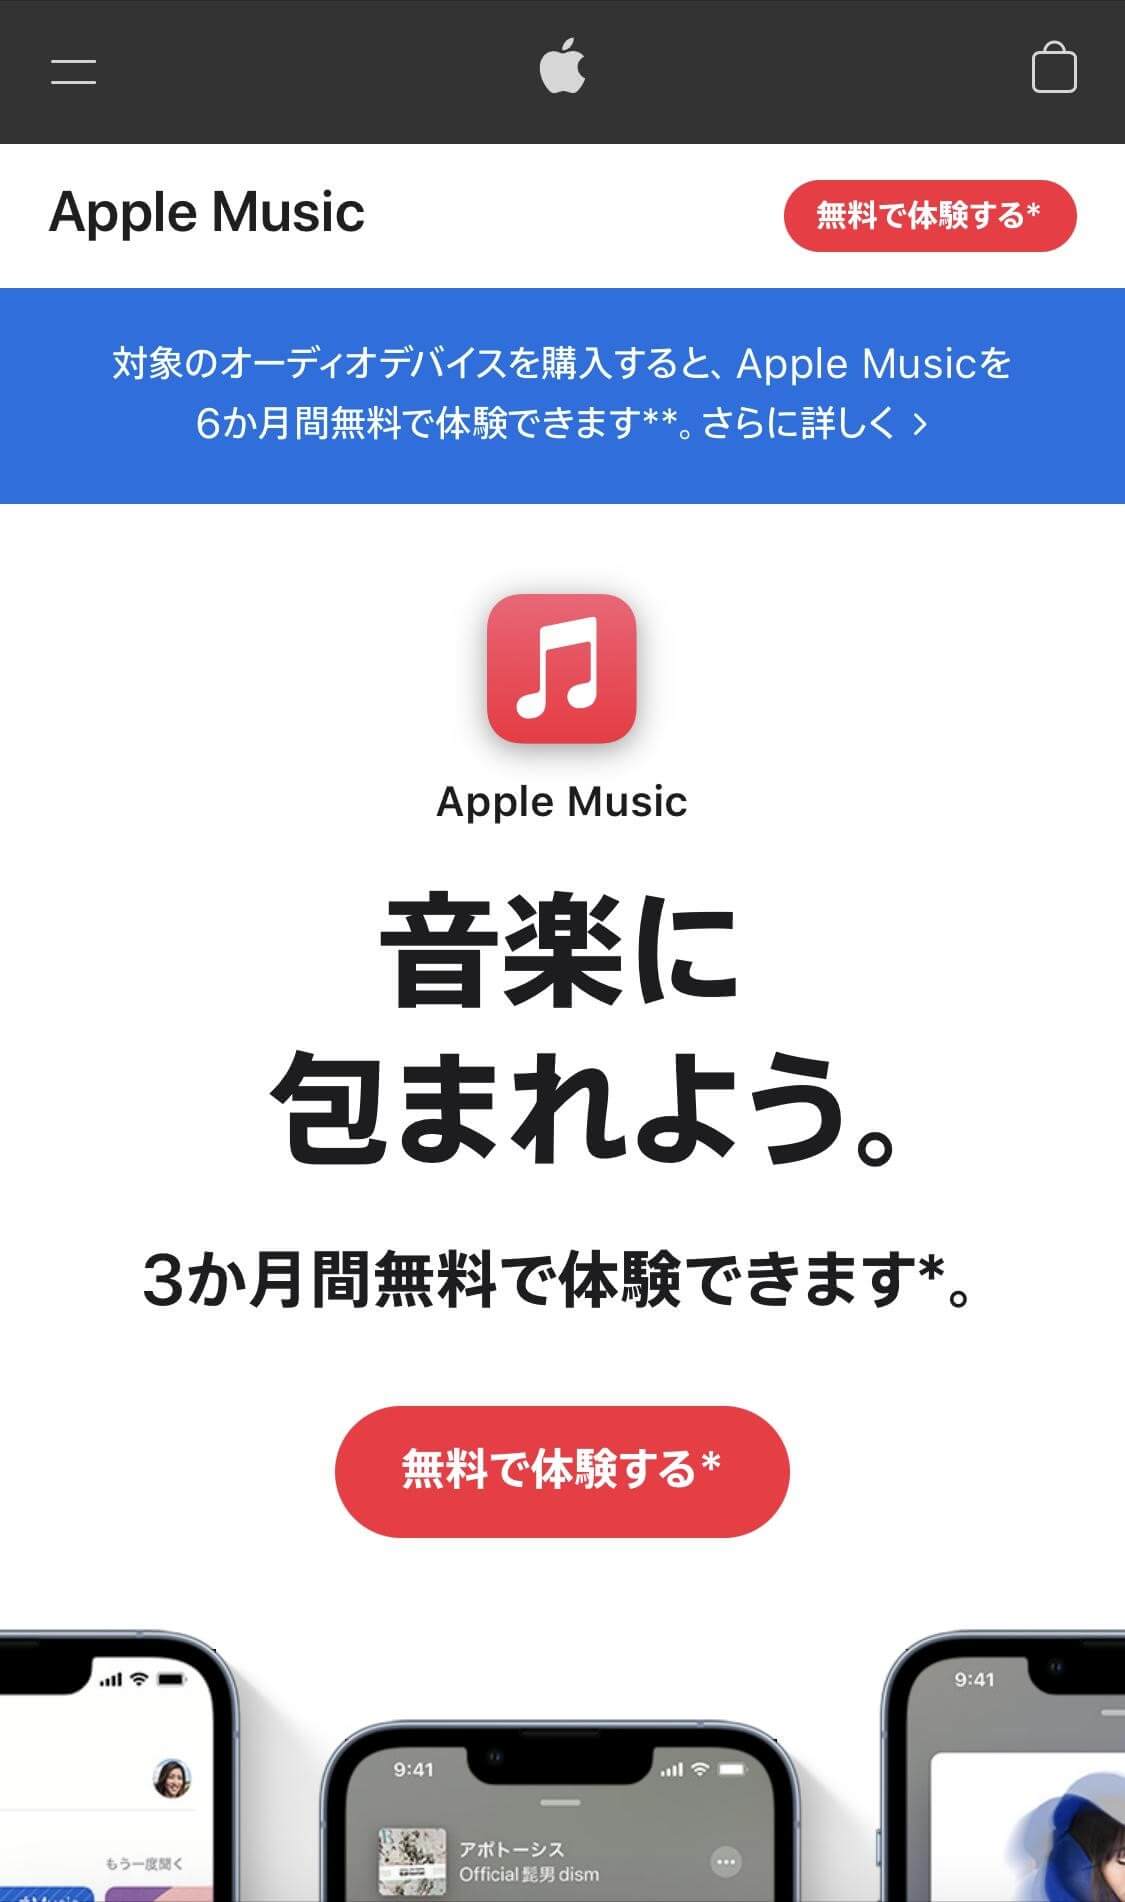 Apple Musicを契約